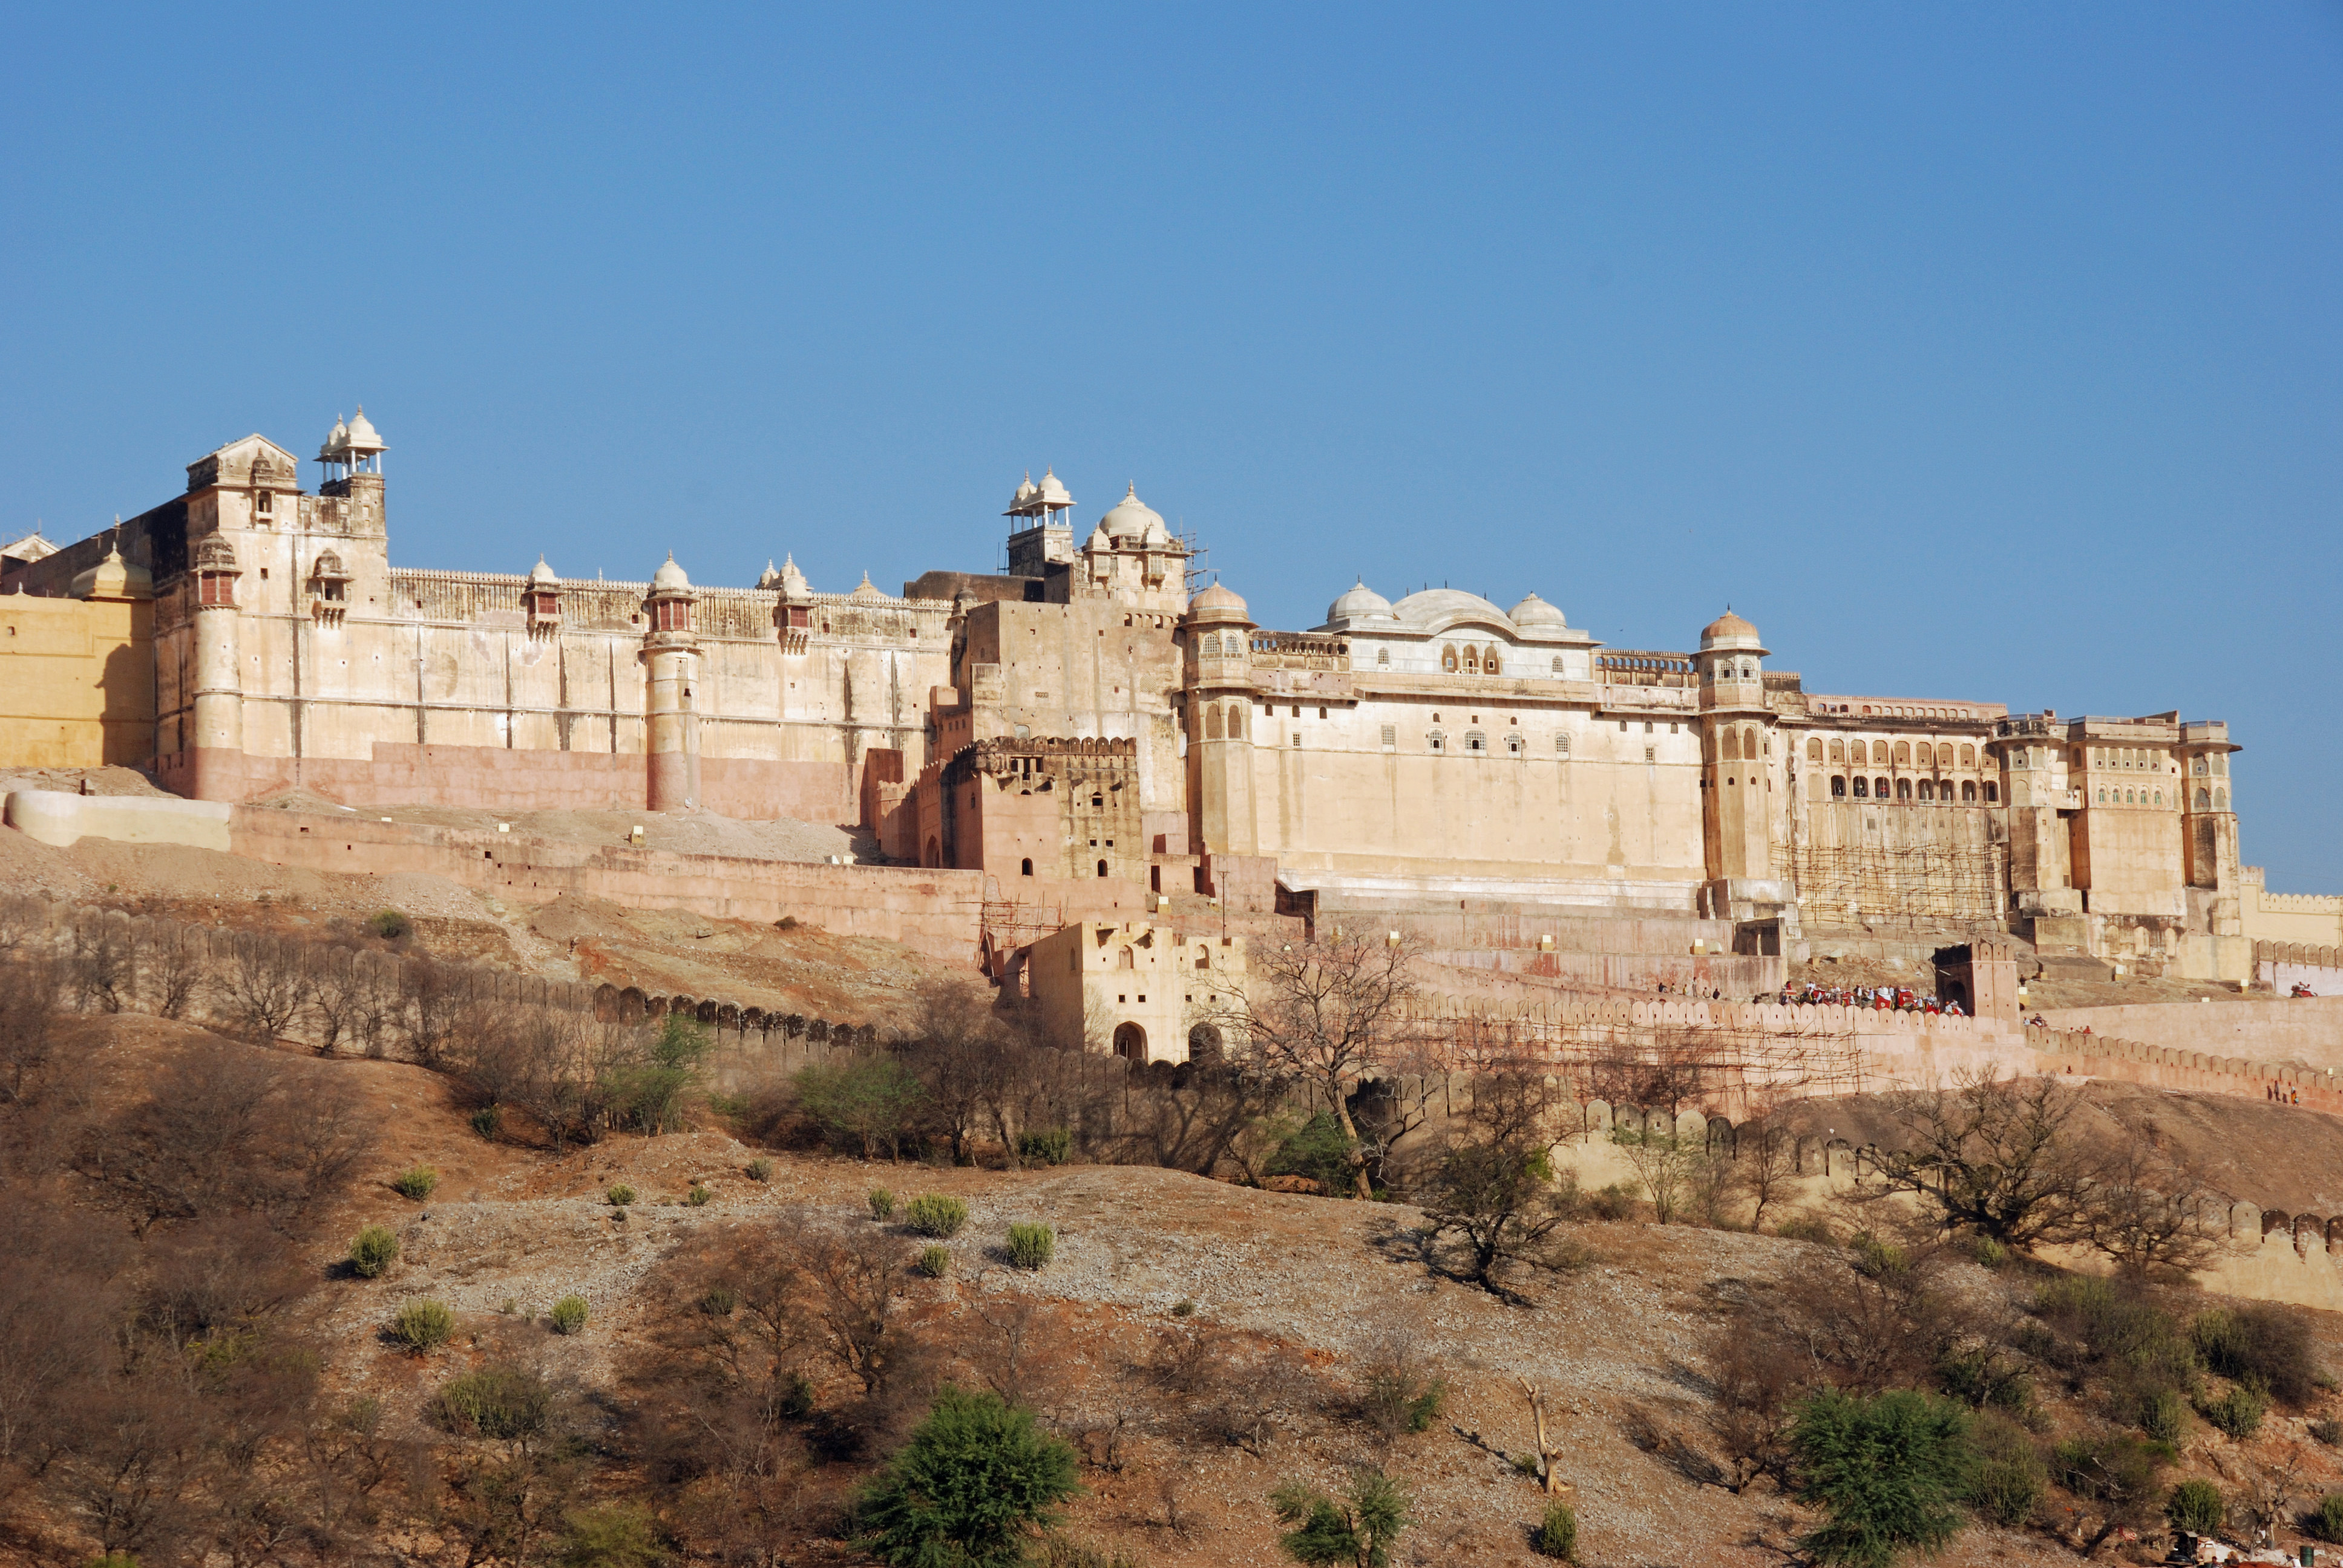 India, Jaipur, Amber Fort